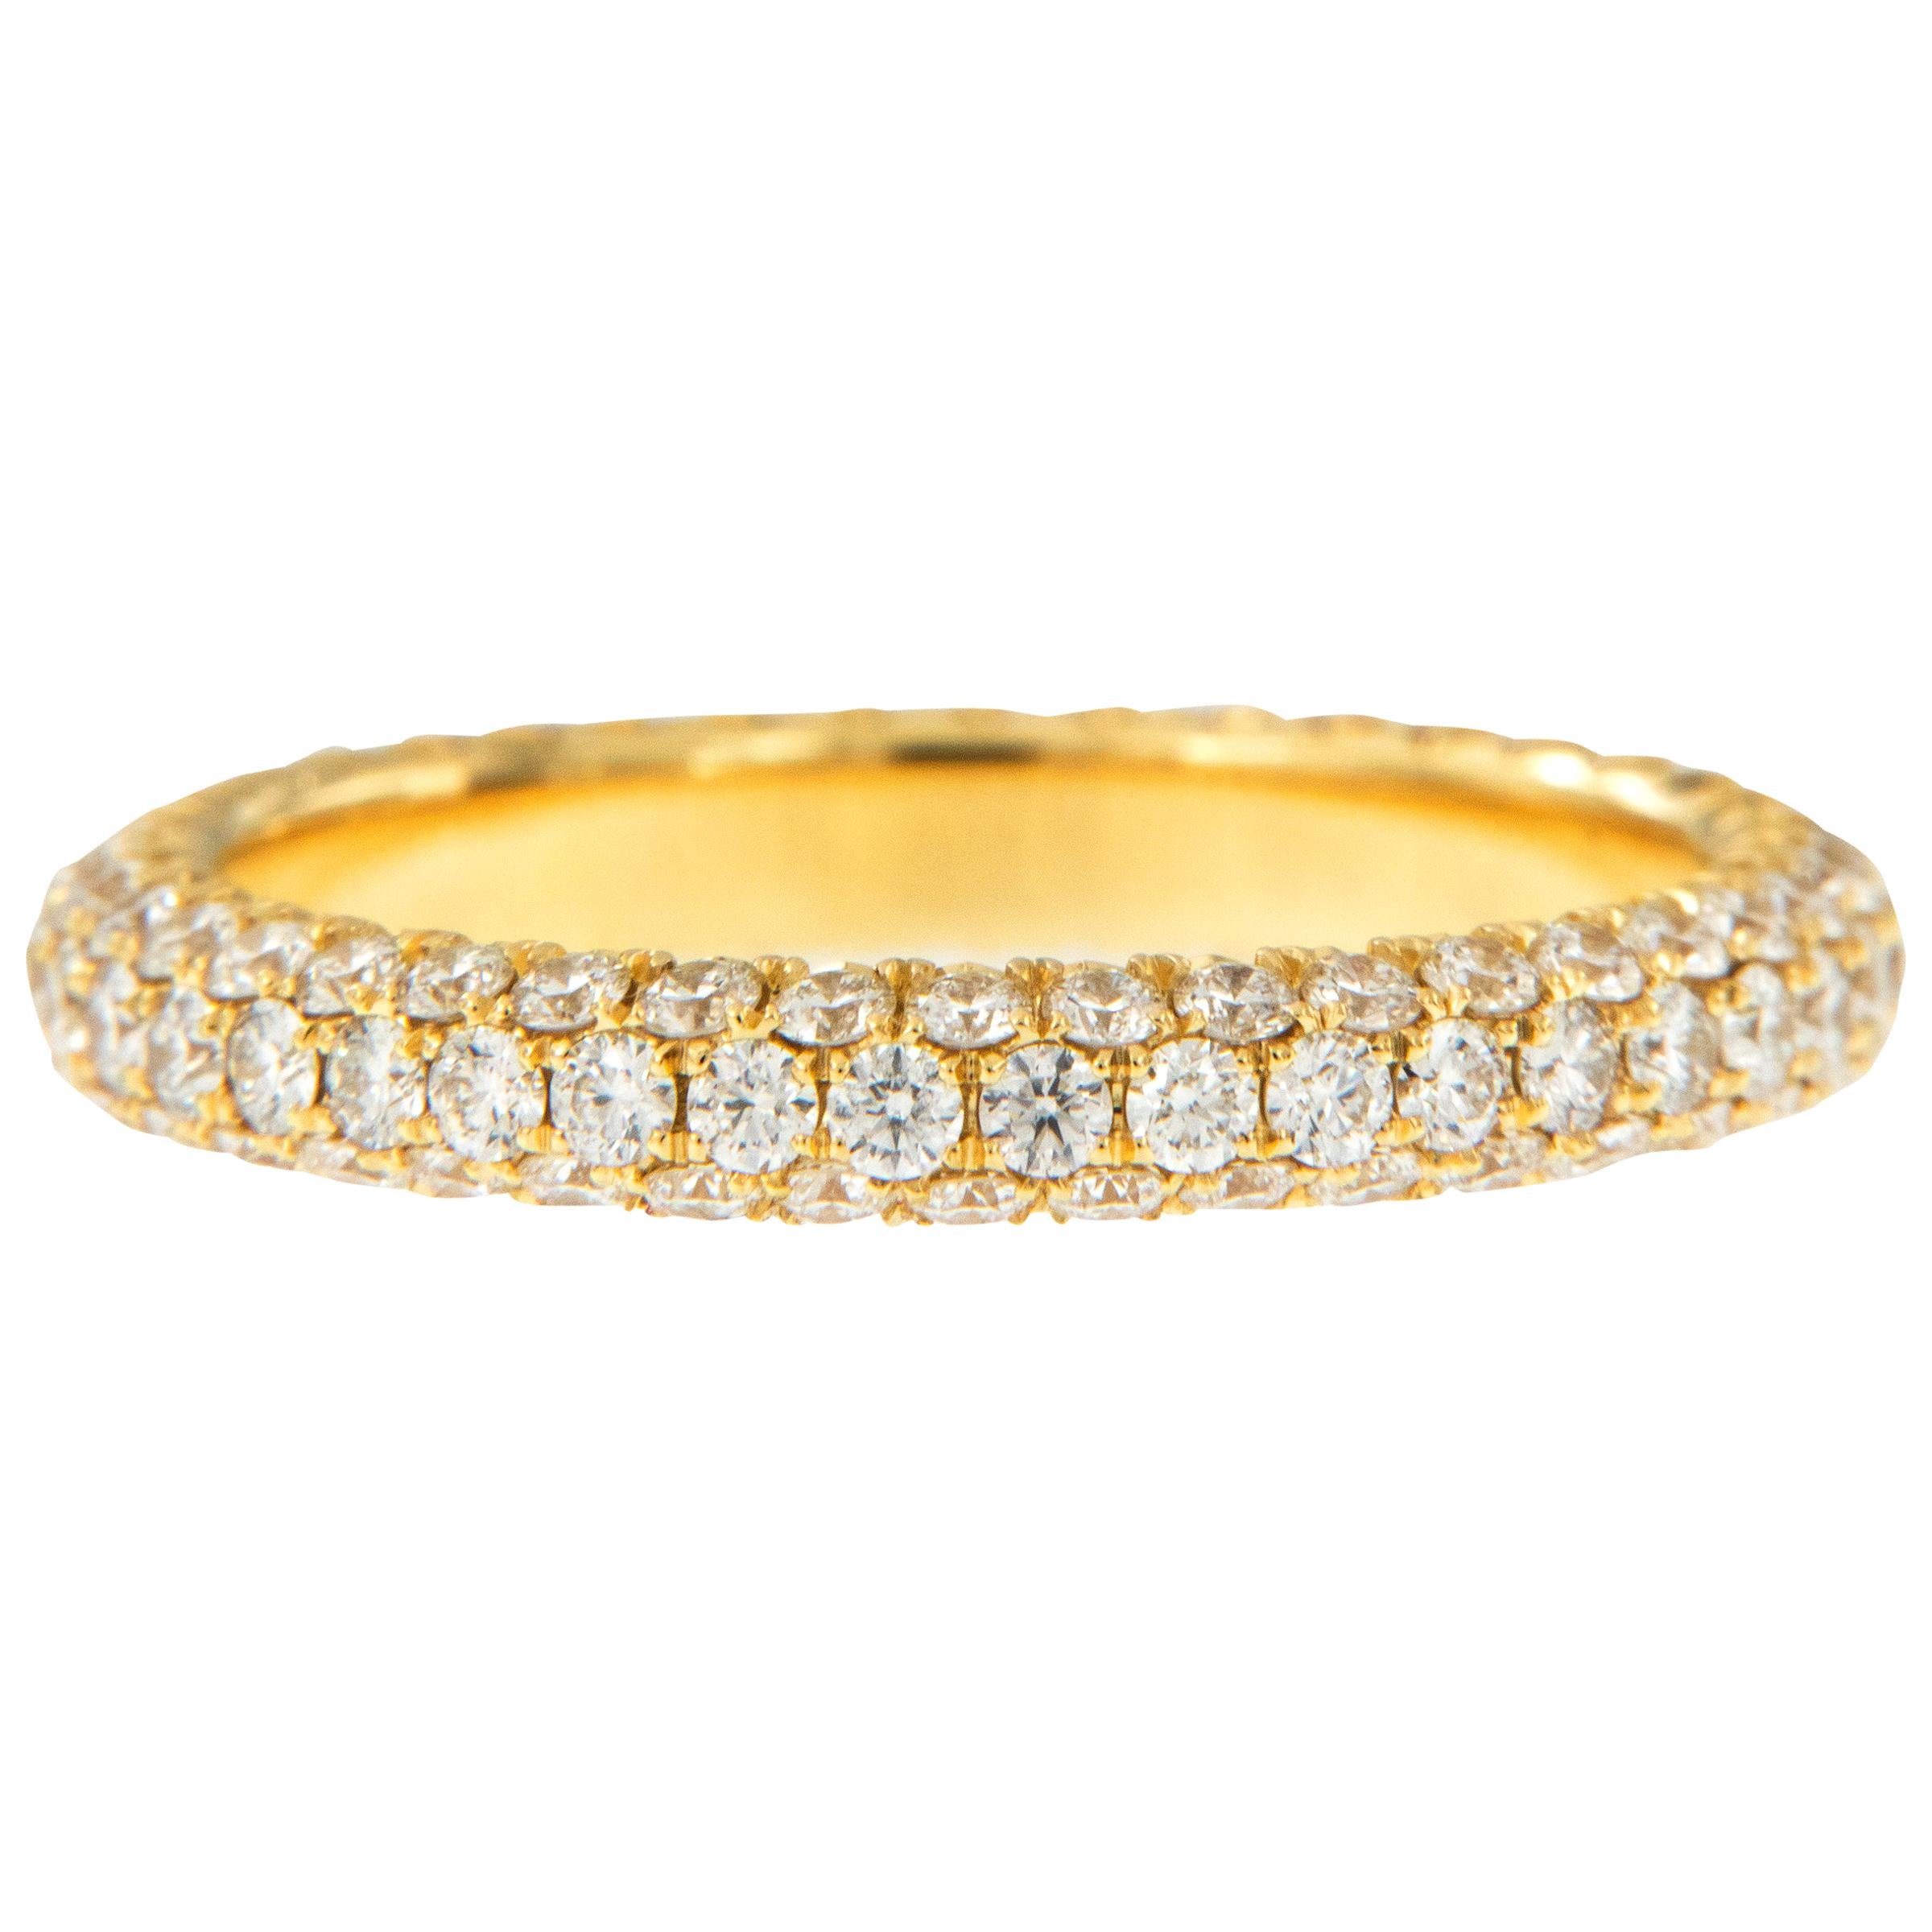 William Rosenberg 18 Karat Yellow Gold 1.49 Carat Pave' Diamond Eternity Ring